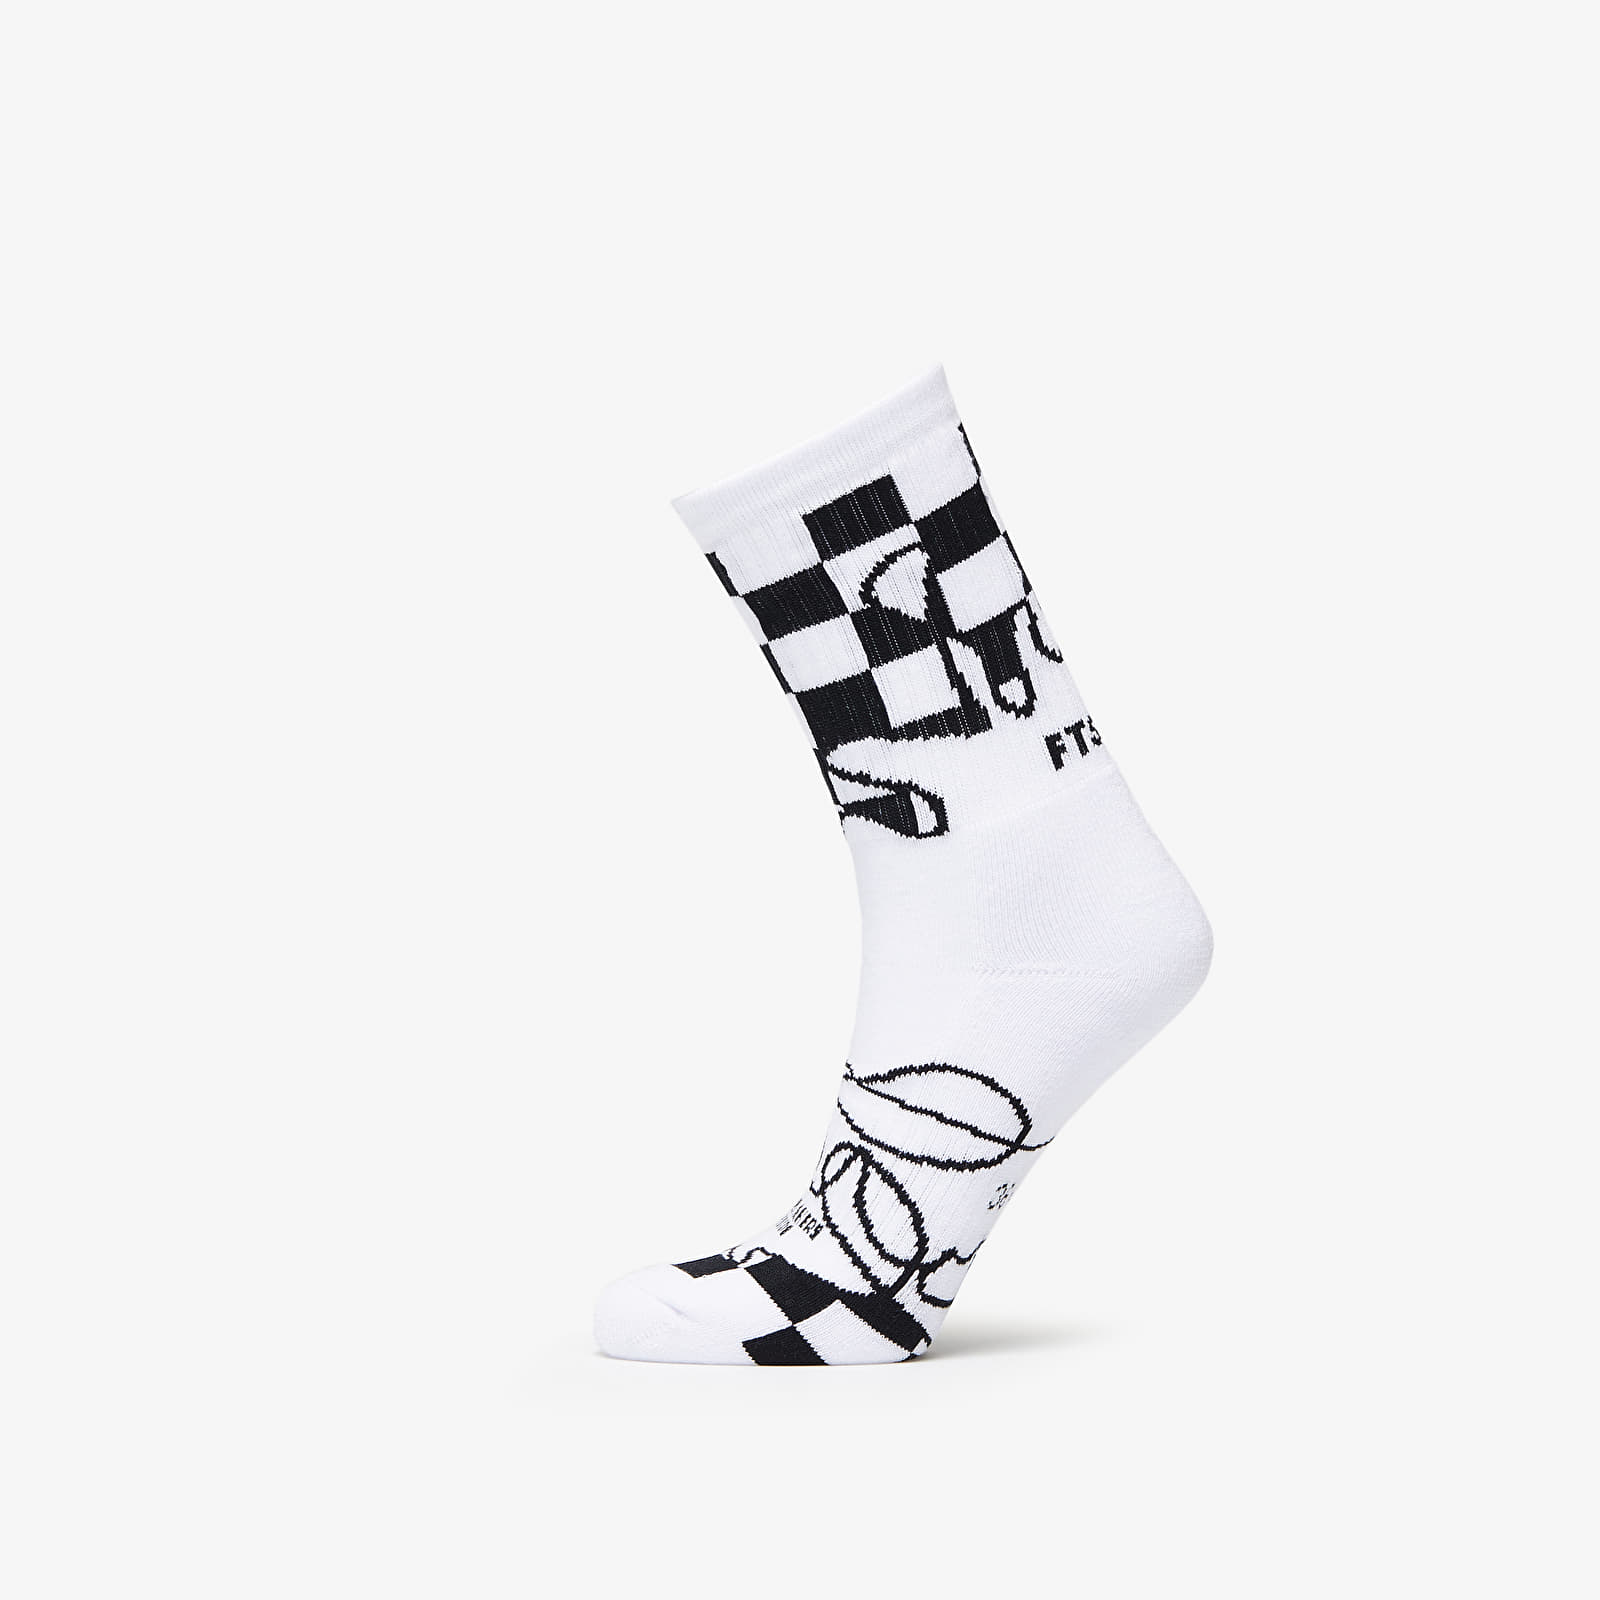 Calzetti Footshop The Nju Checker Socks Black/ White